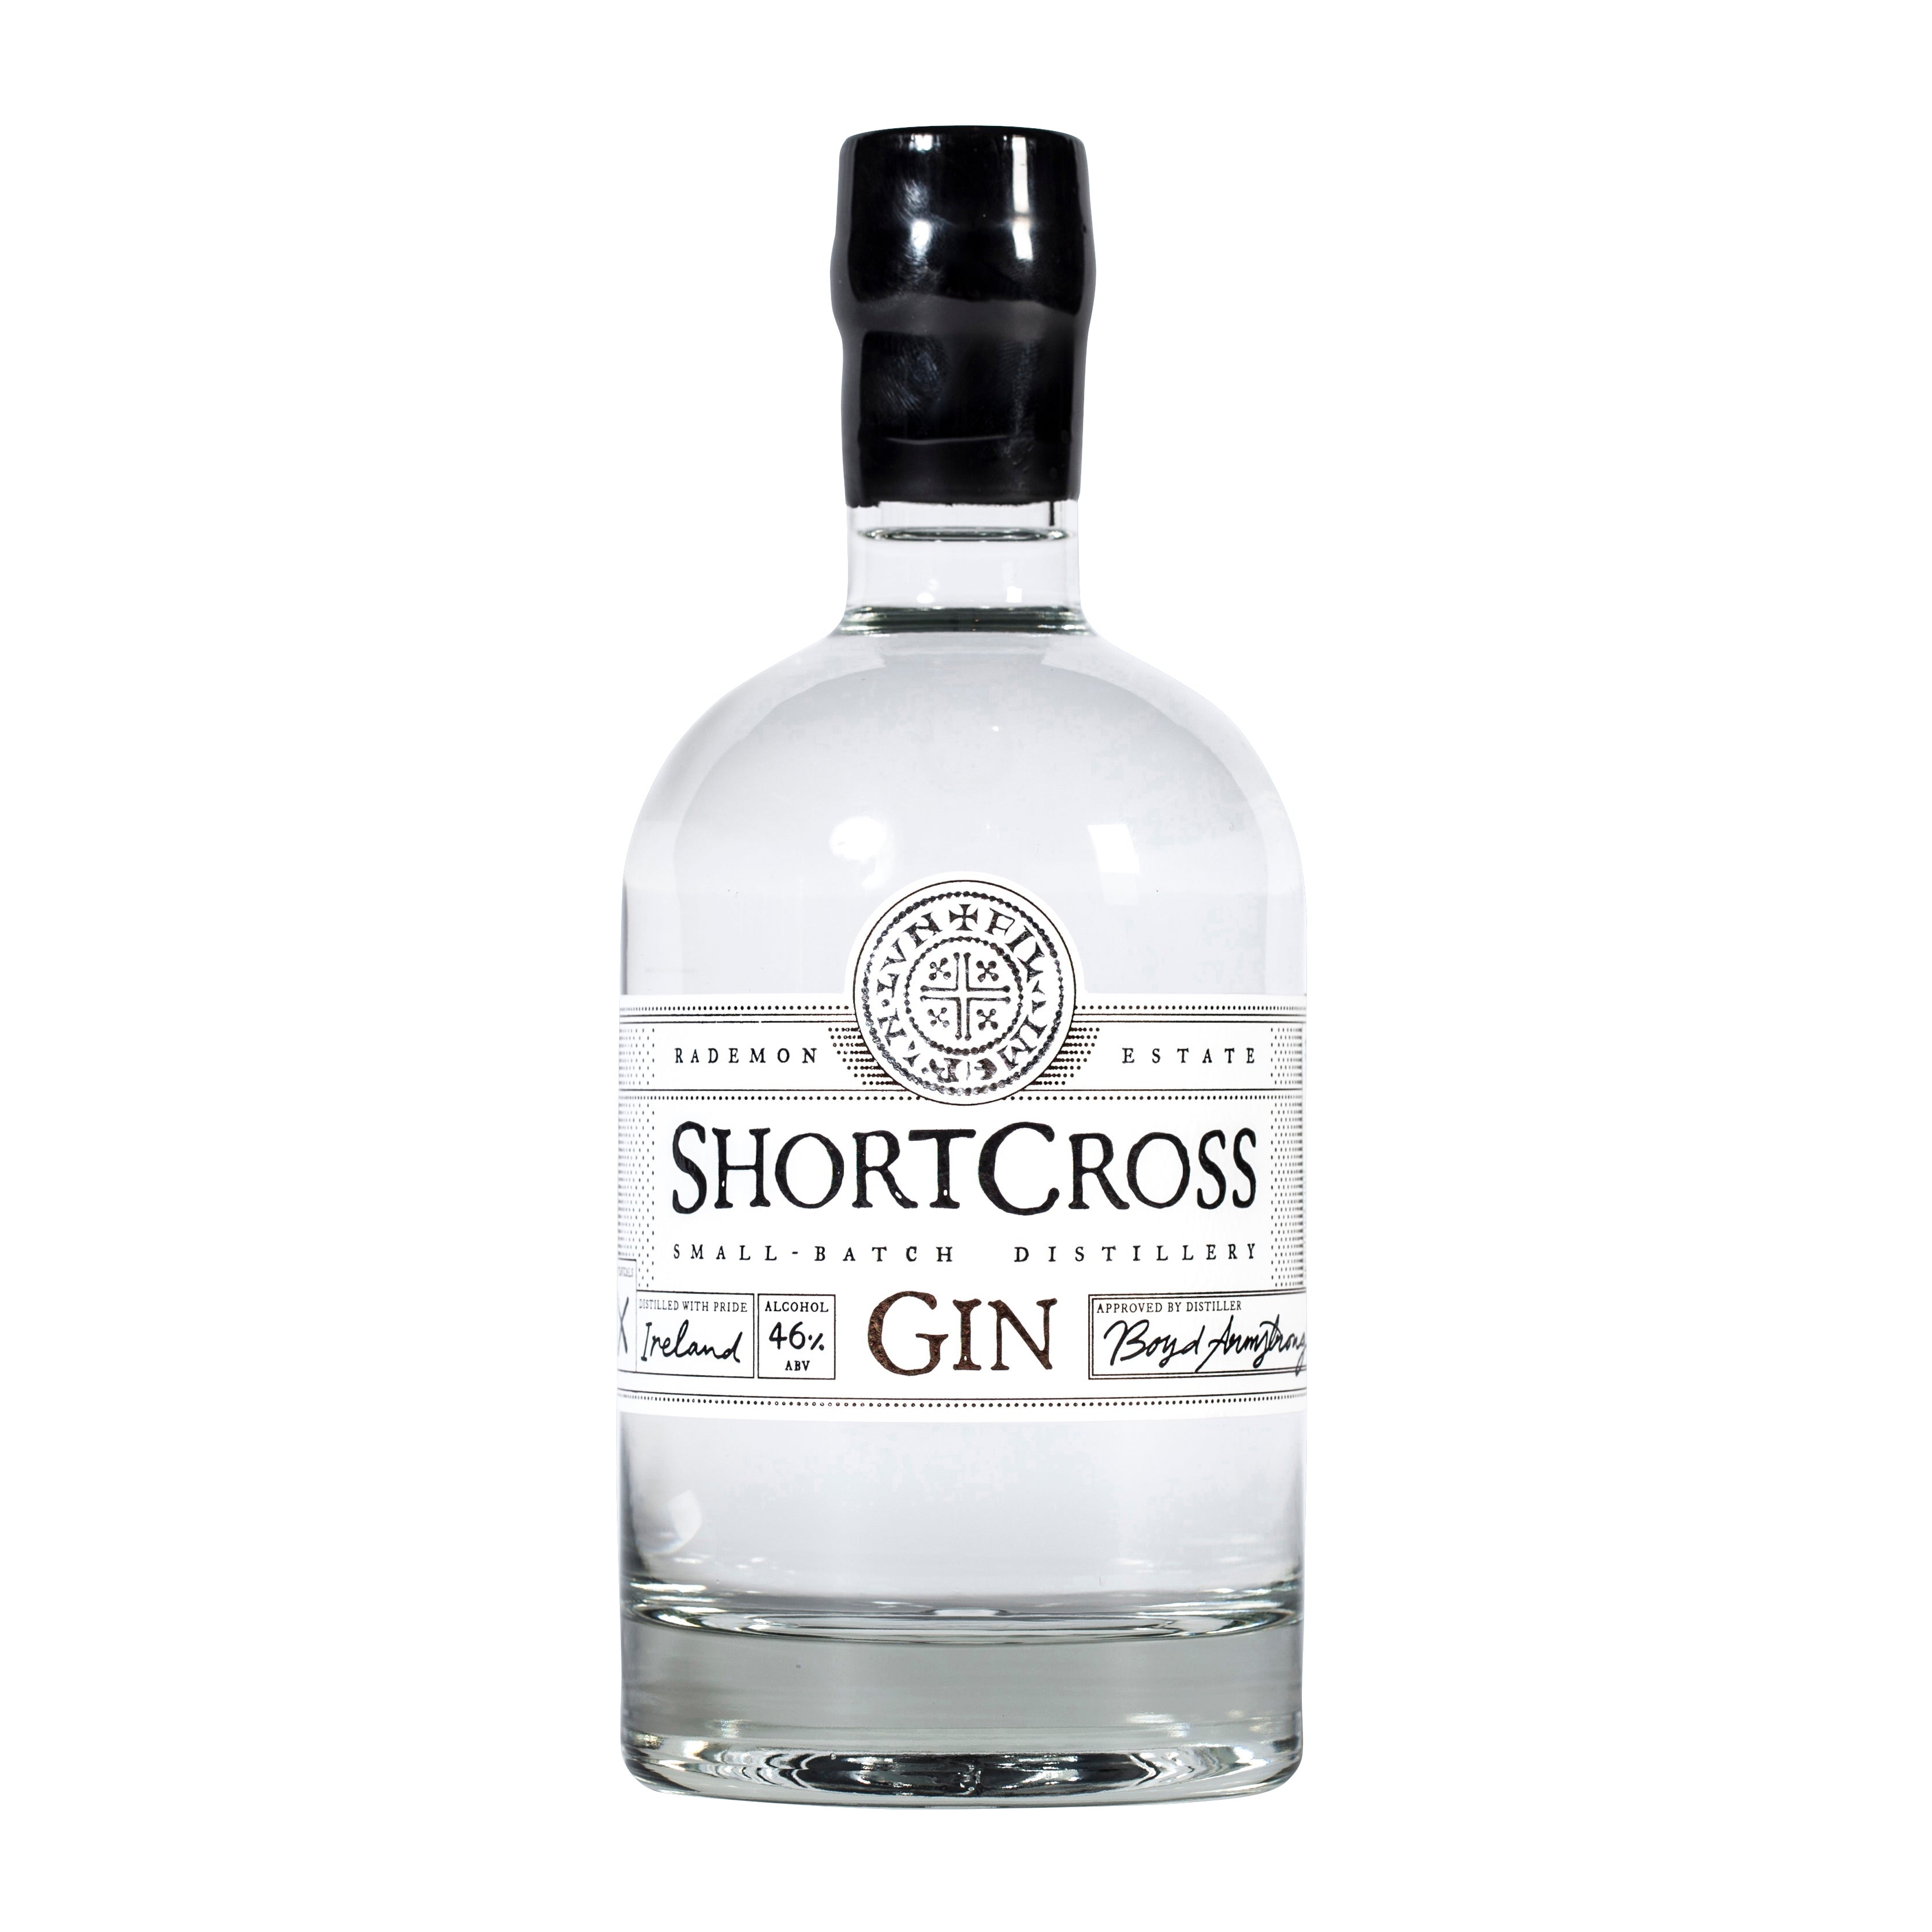 Shortcross Original Classic Gin (70cl) 46% ABV